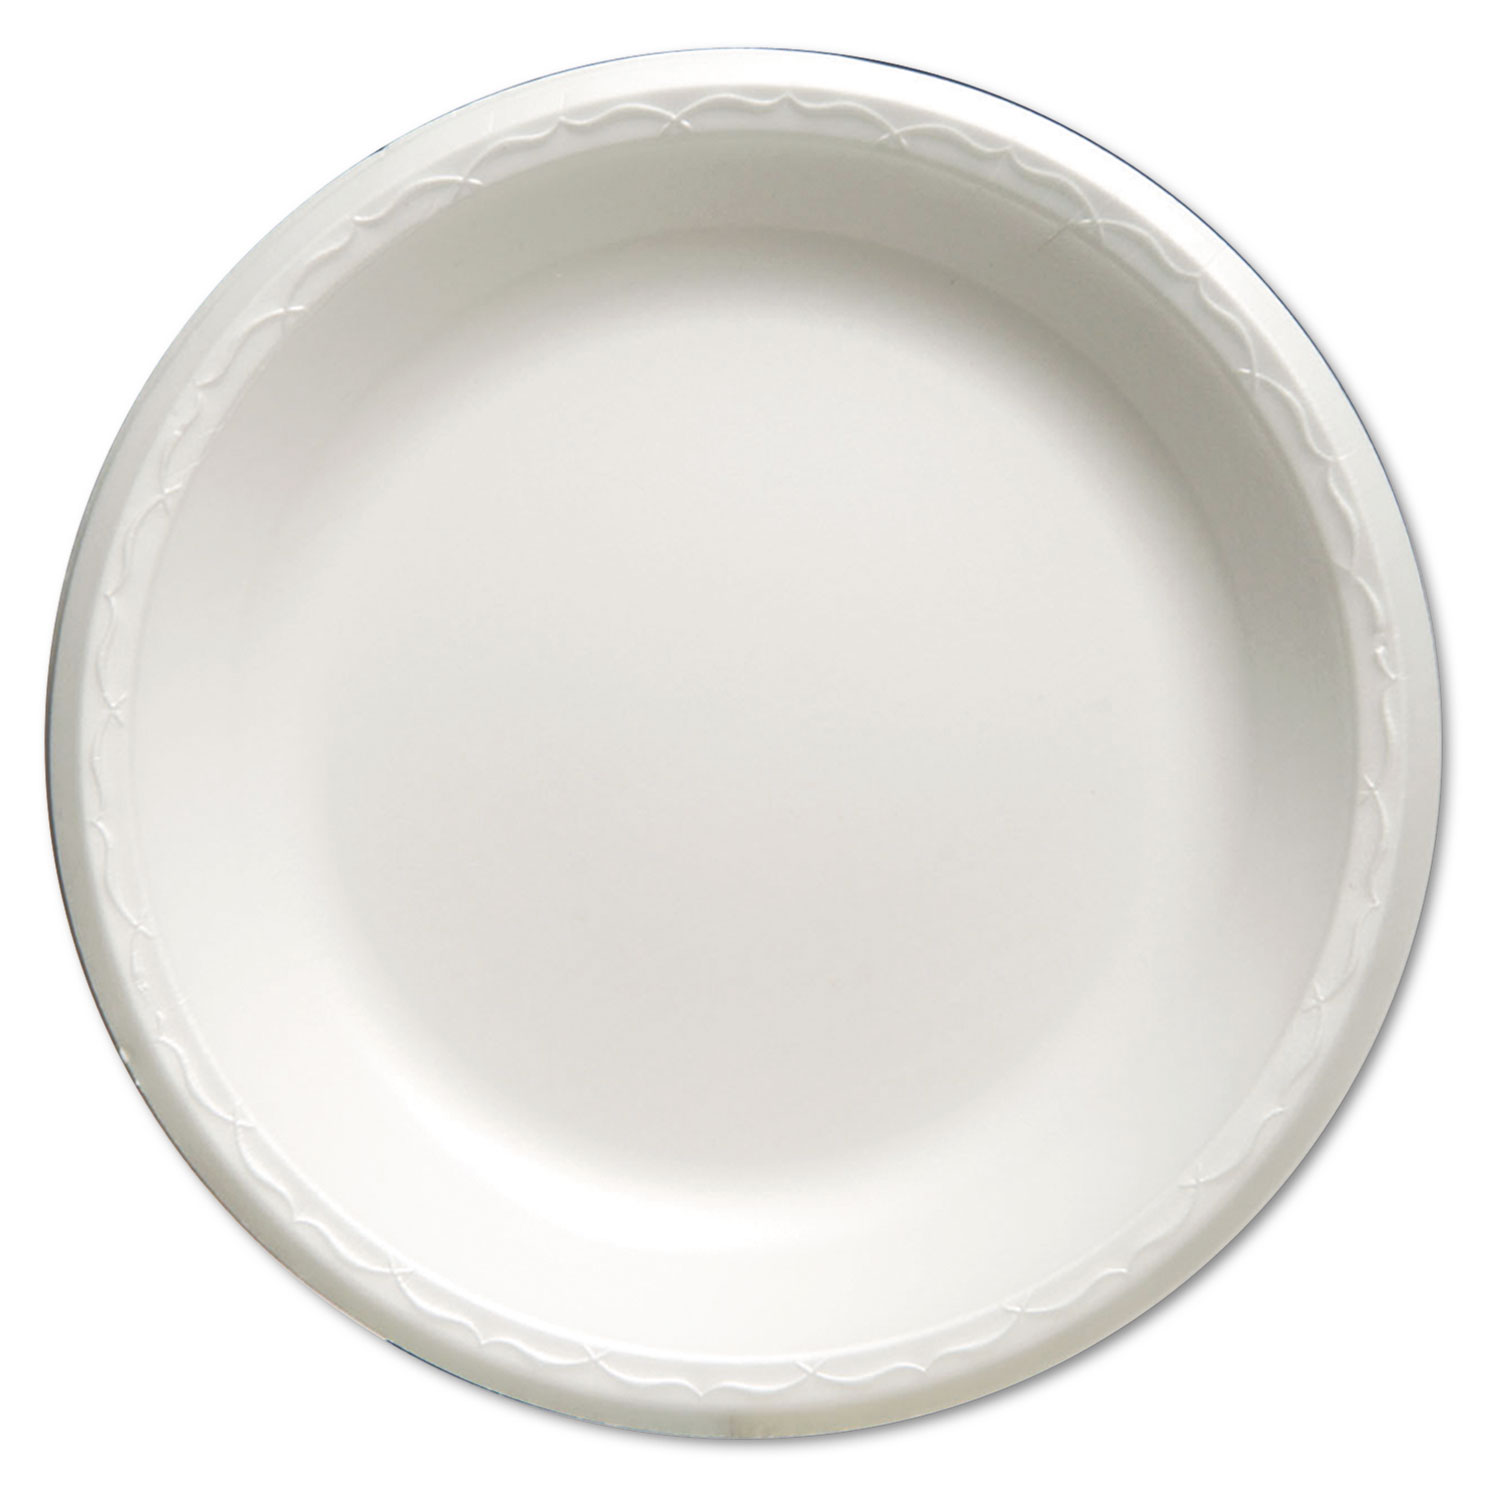  Genpak 81000--- Foam Dinnerware, Plate, 10 1/4 dia, White, 125/Pack, 4 Packs/Carton (GNP81000) 